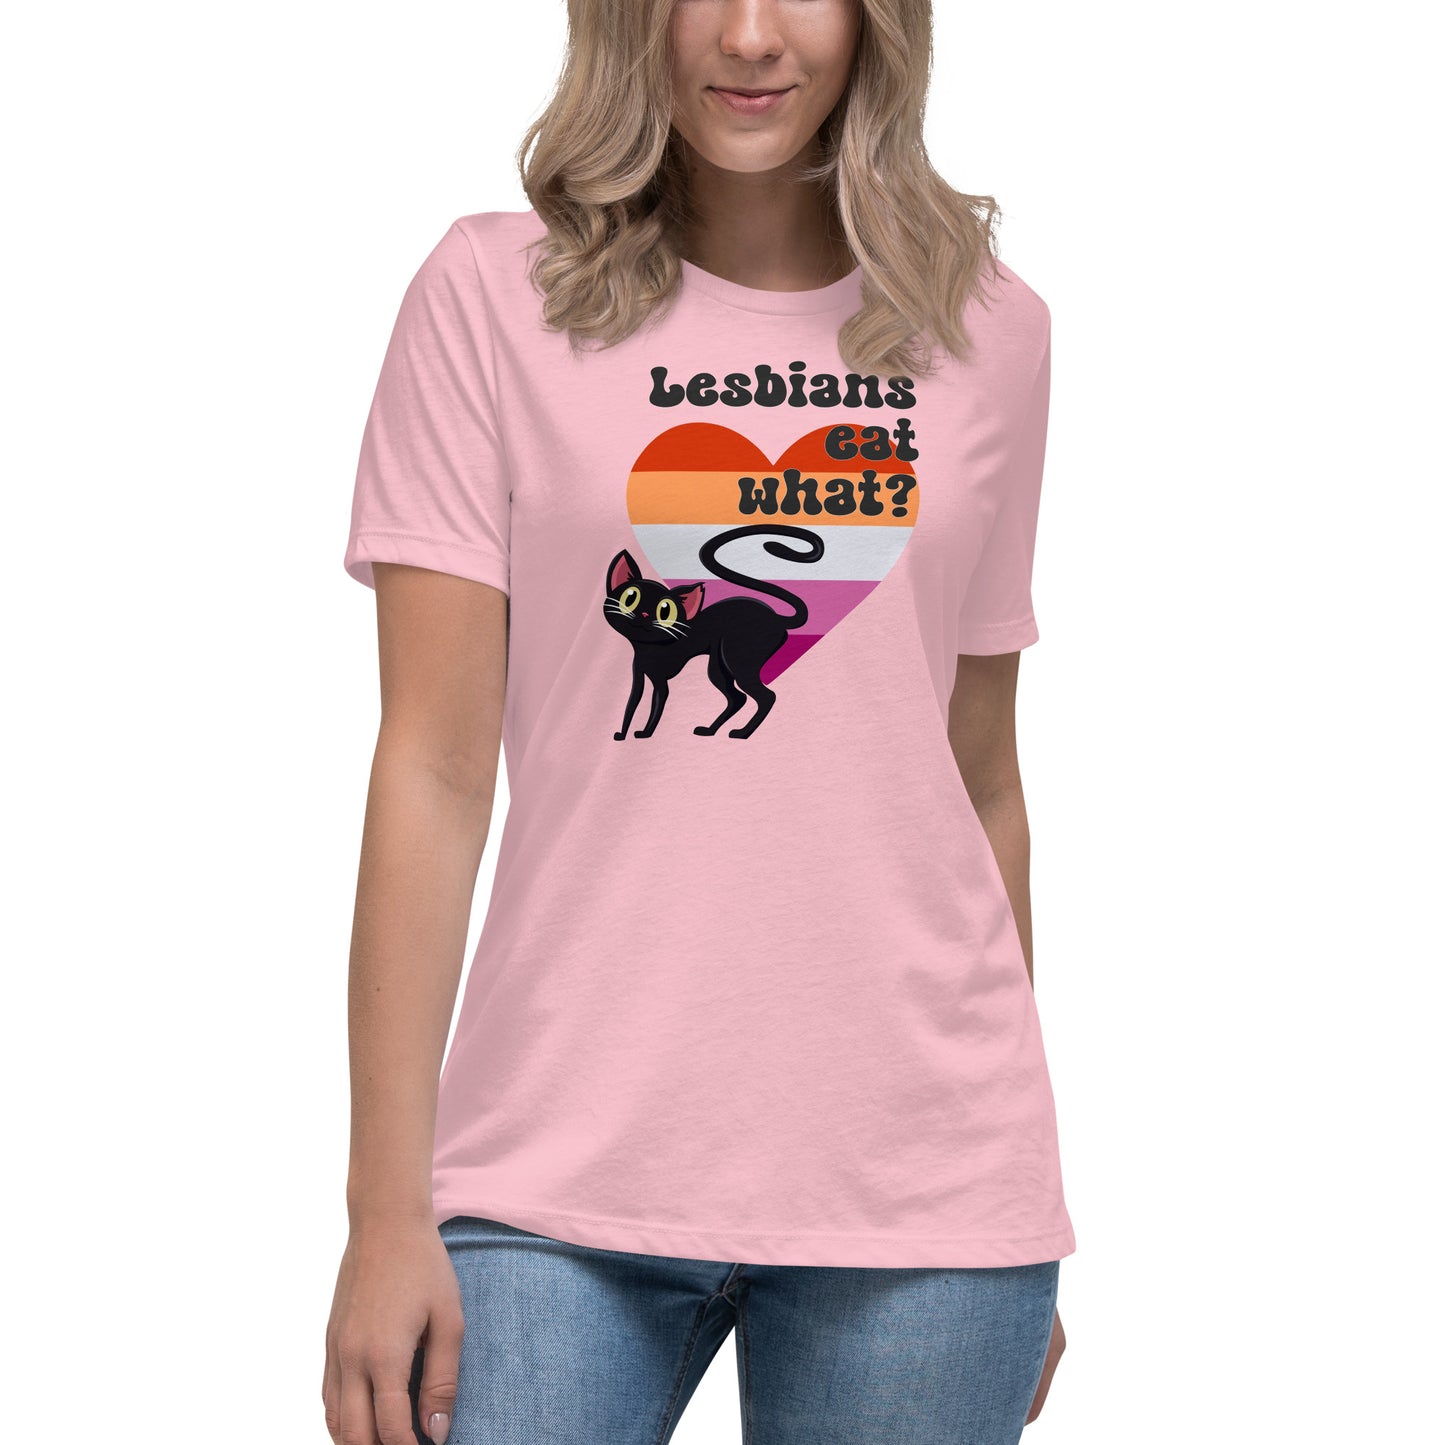 Lesbians eat what? Relaxed T-Shirt